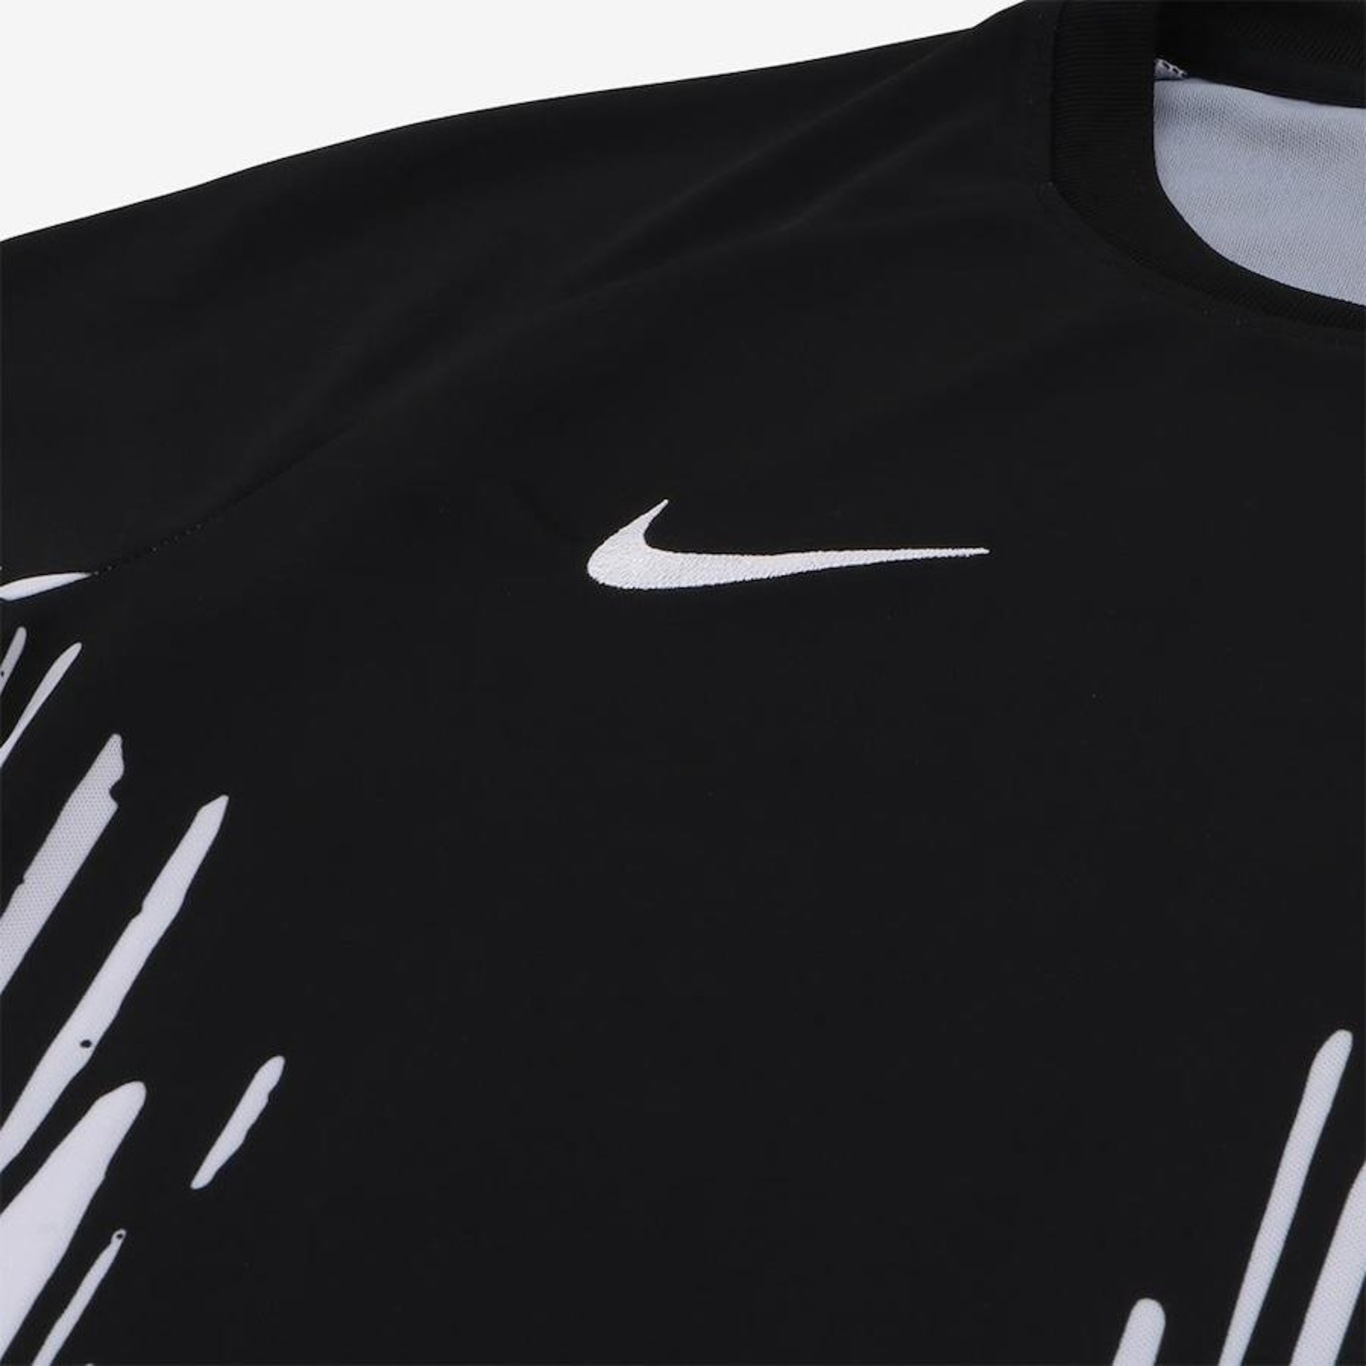 Camiseta Nike Corinthians Pre Match Feminina - Nike